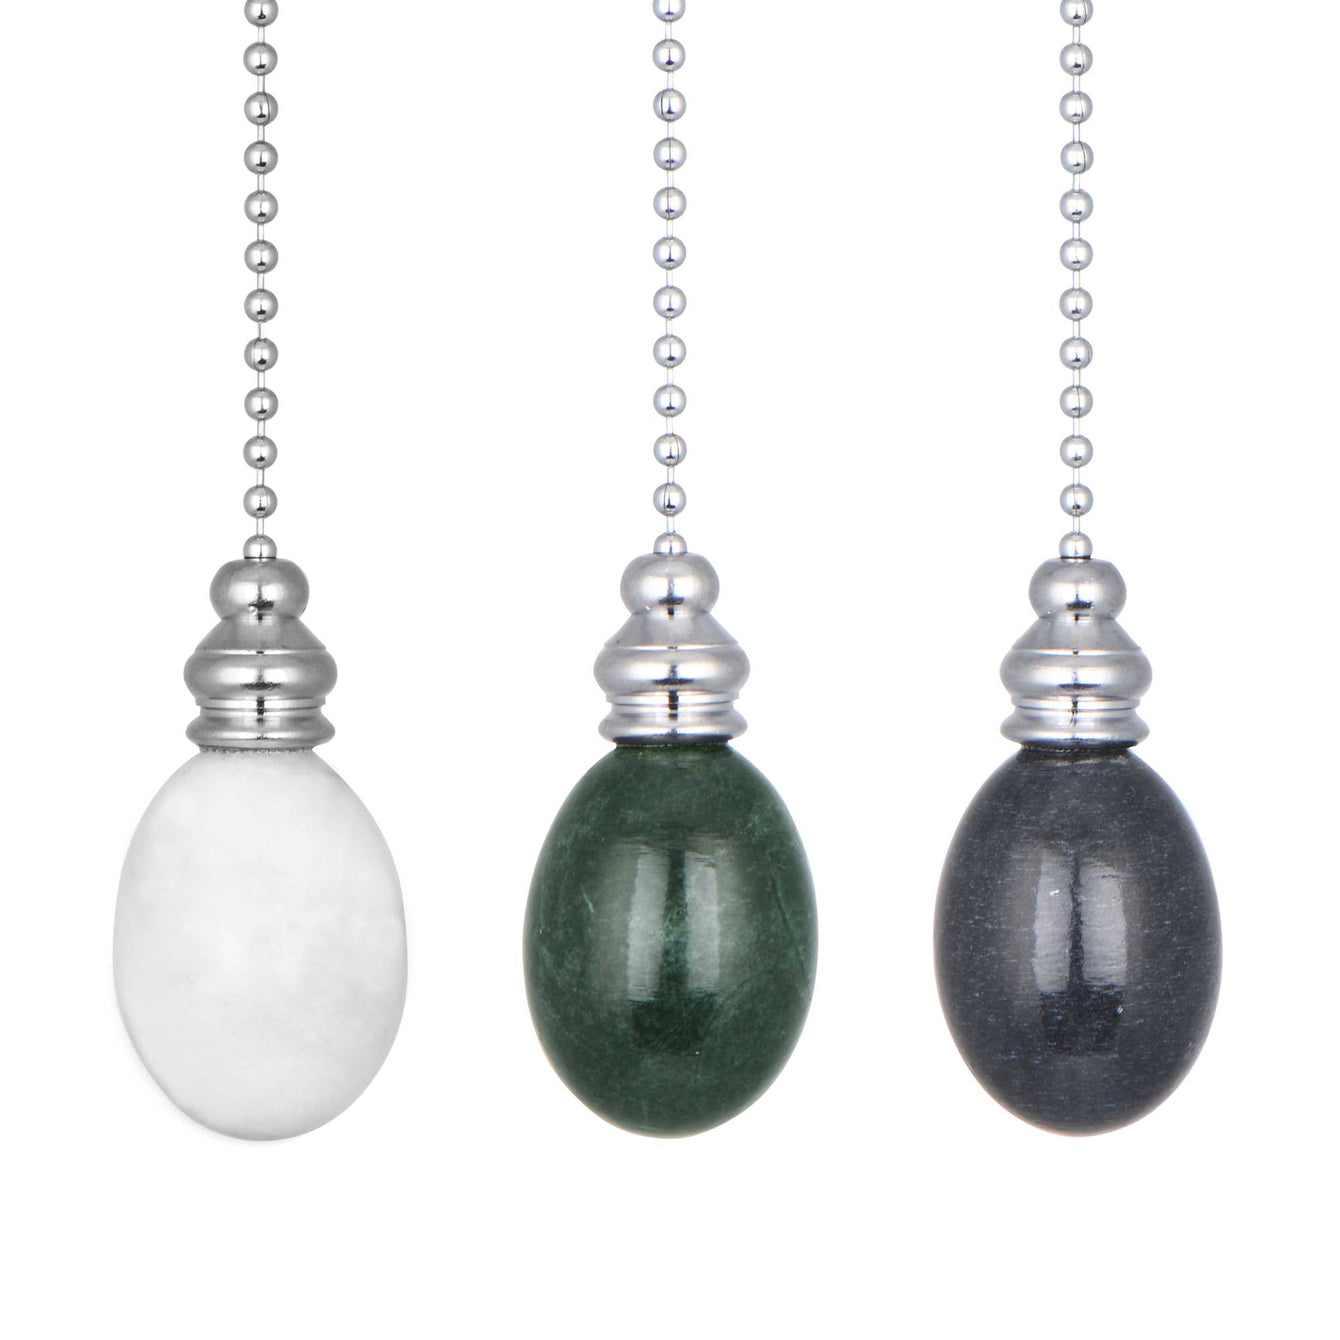 ElekTek Light Pull Chain Marble Egg Drop Chrome With 80cm Matching Chain Green